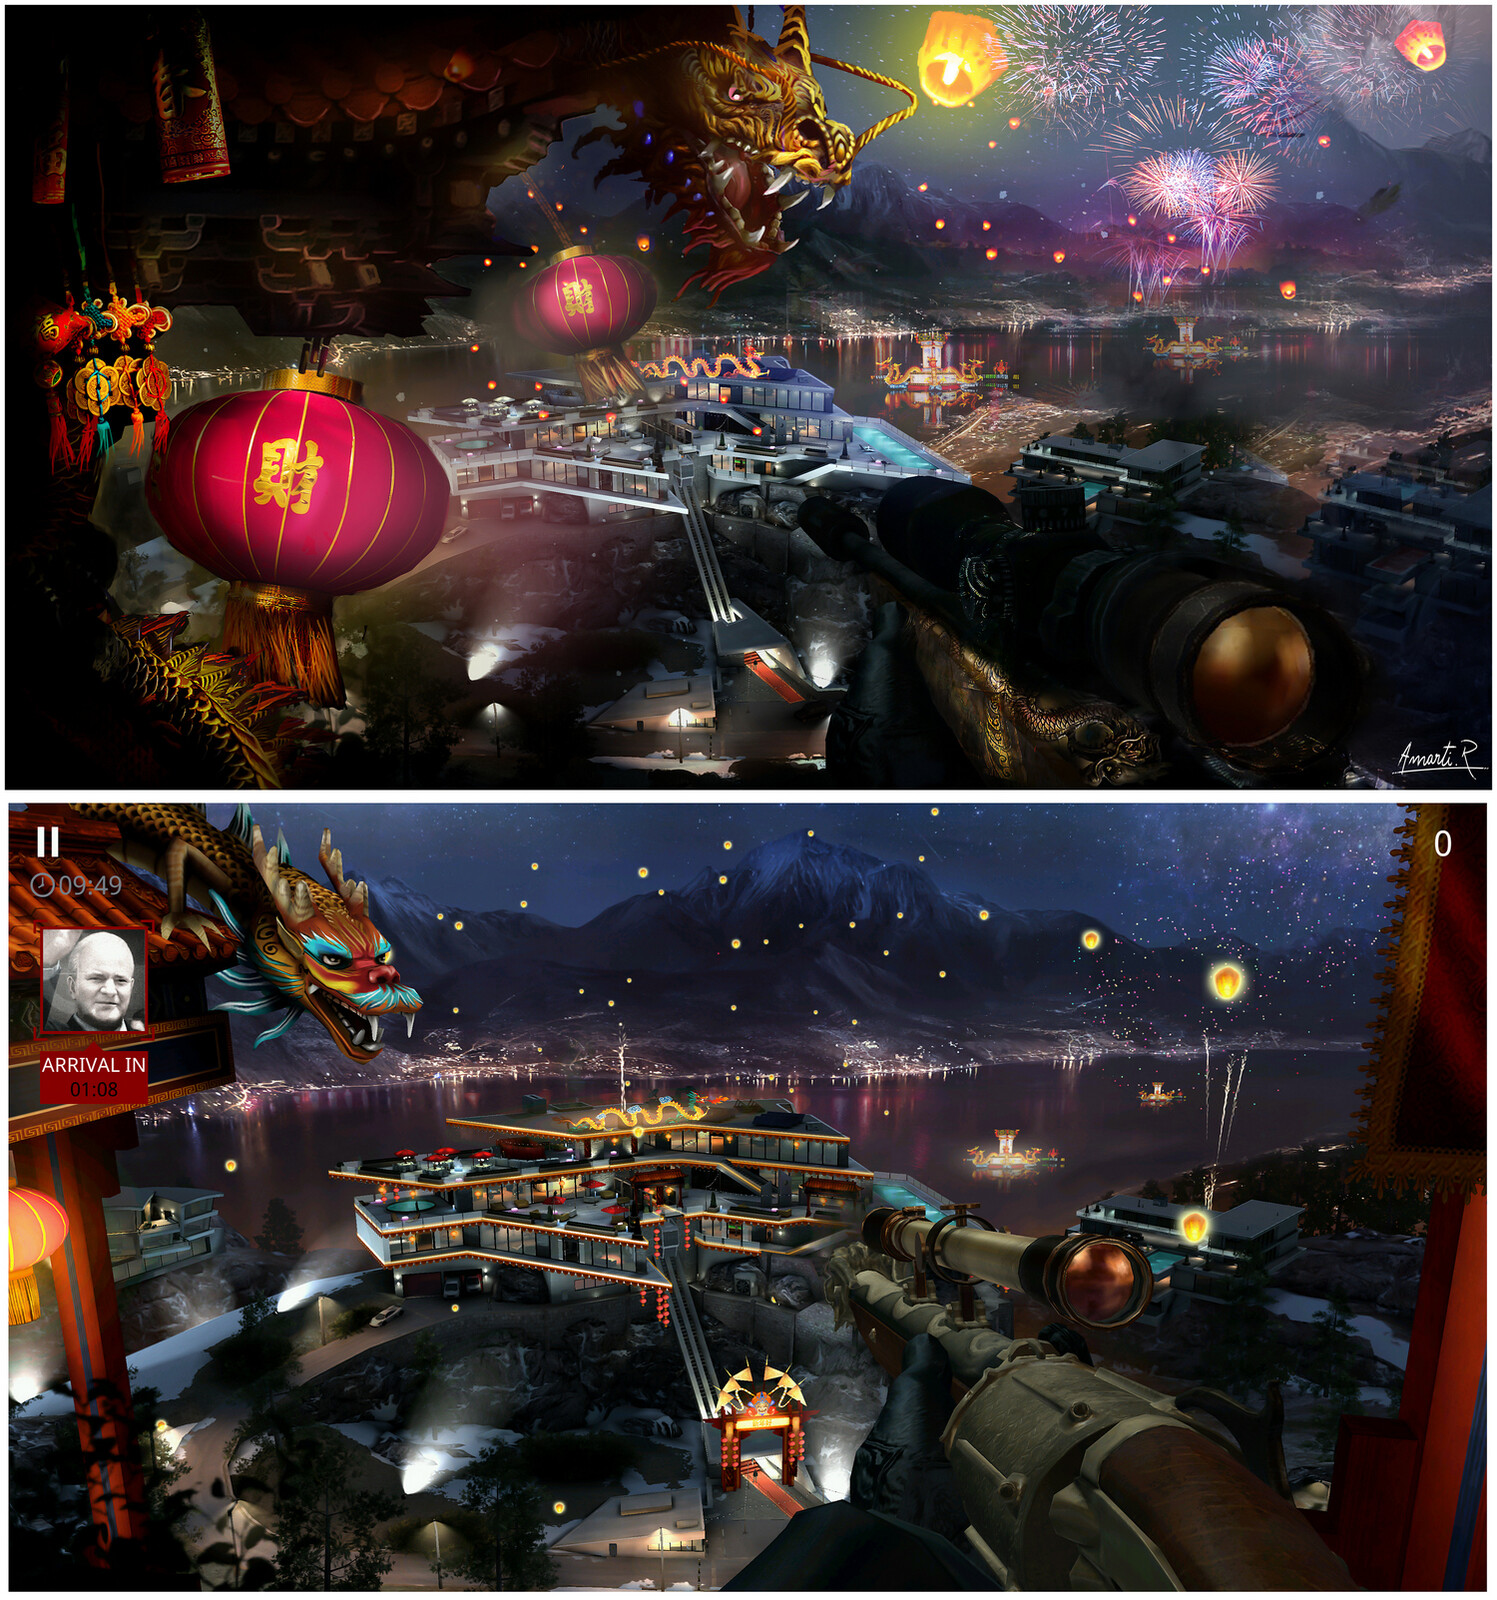 Top : Concept
Bottom : 3D Scene